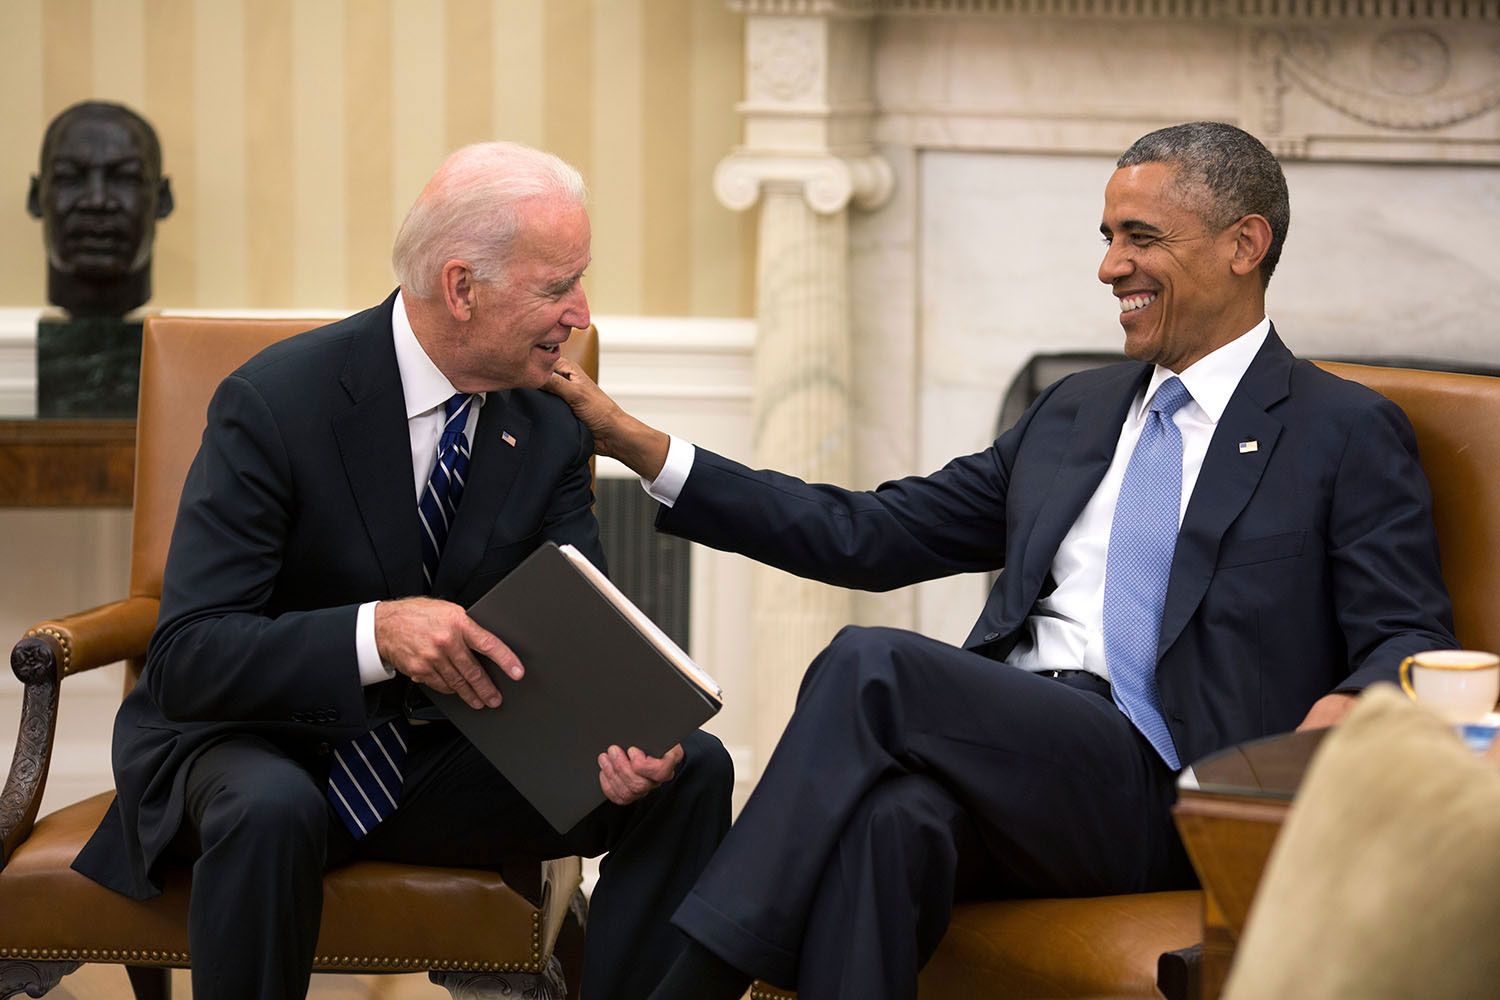 President Obama and Joe Biden's Bromance in 24 Photos